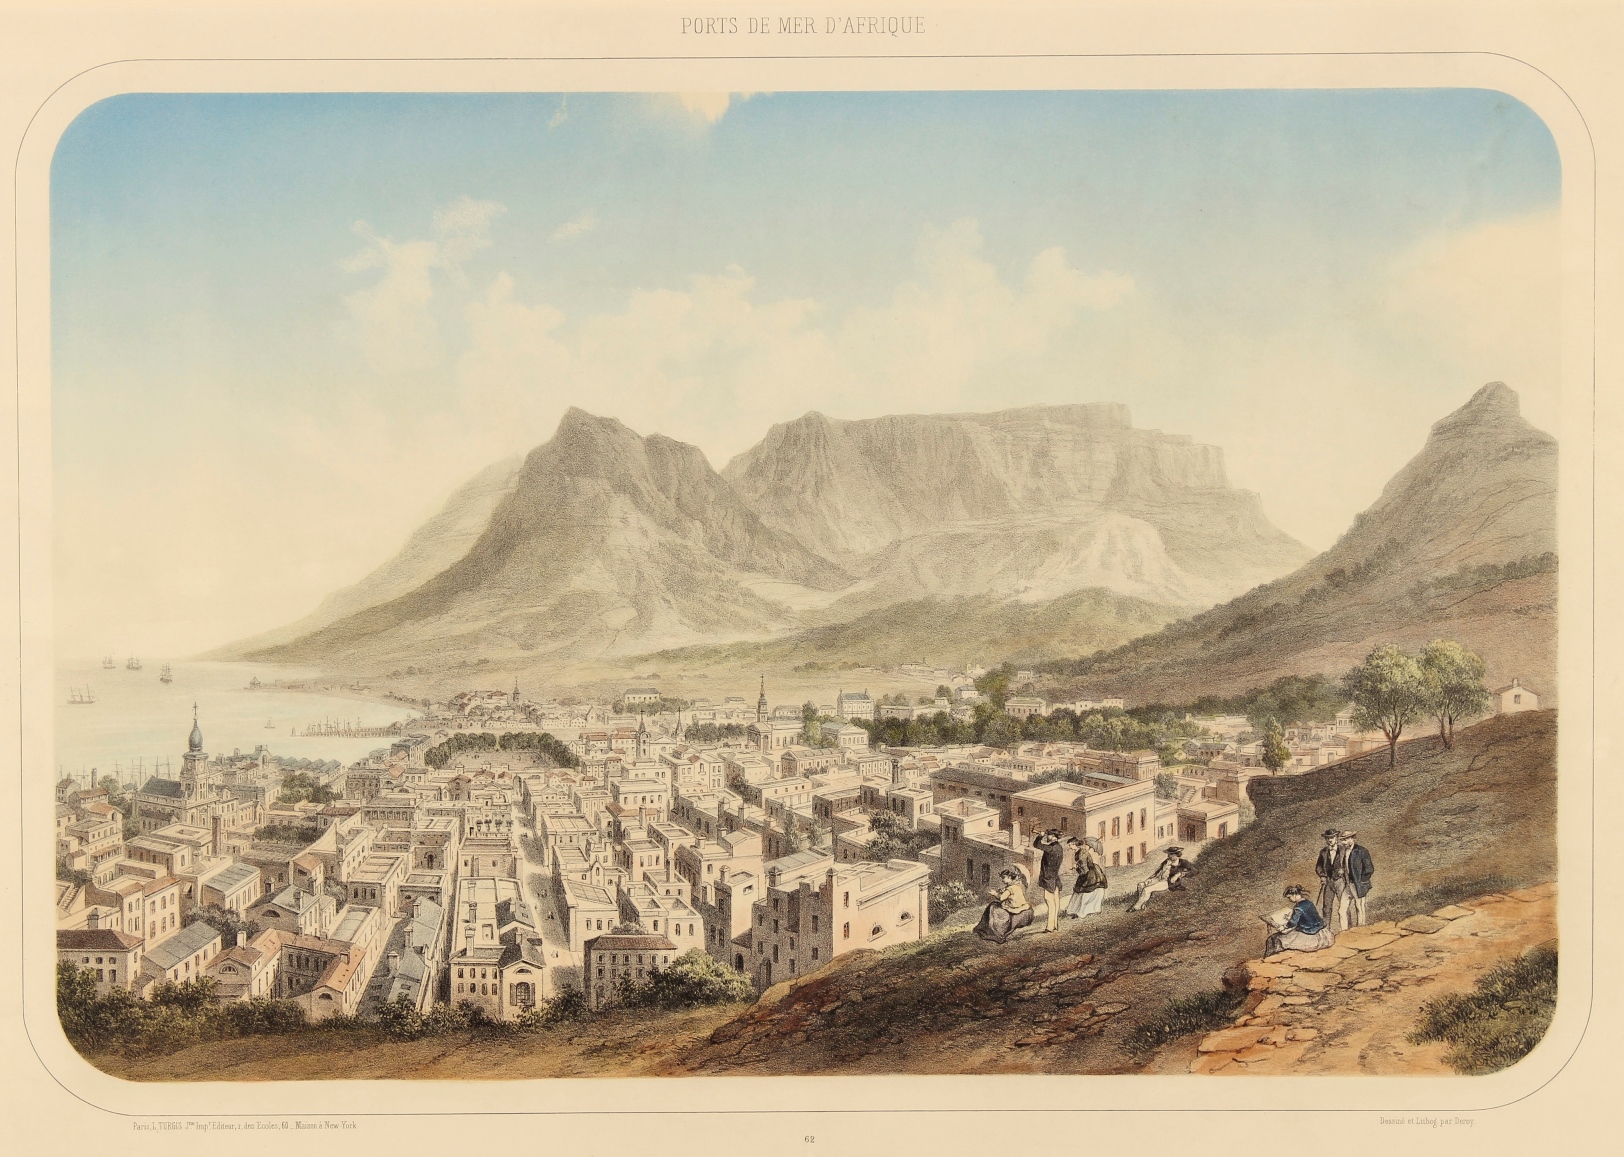  - Cape Town, Kaapstad - Isidore Deroy, c. 1850